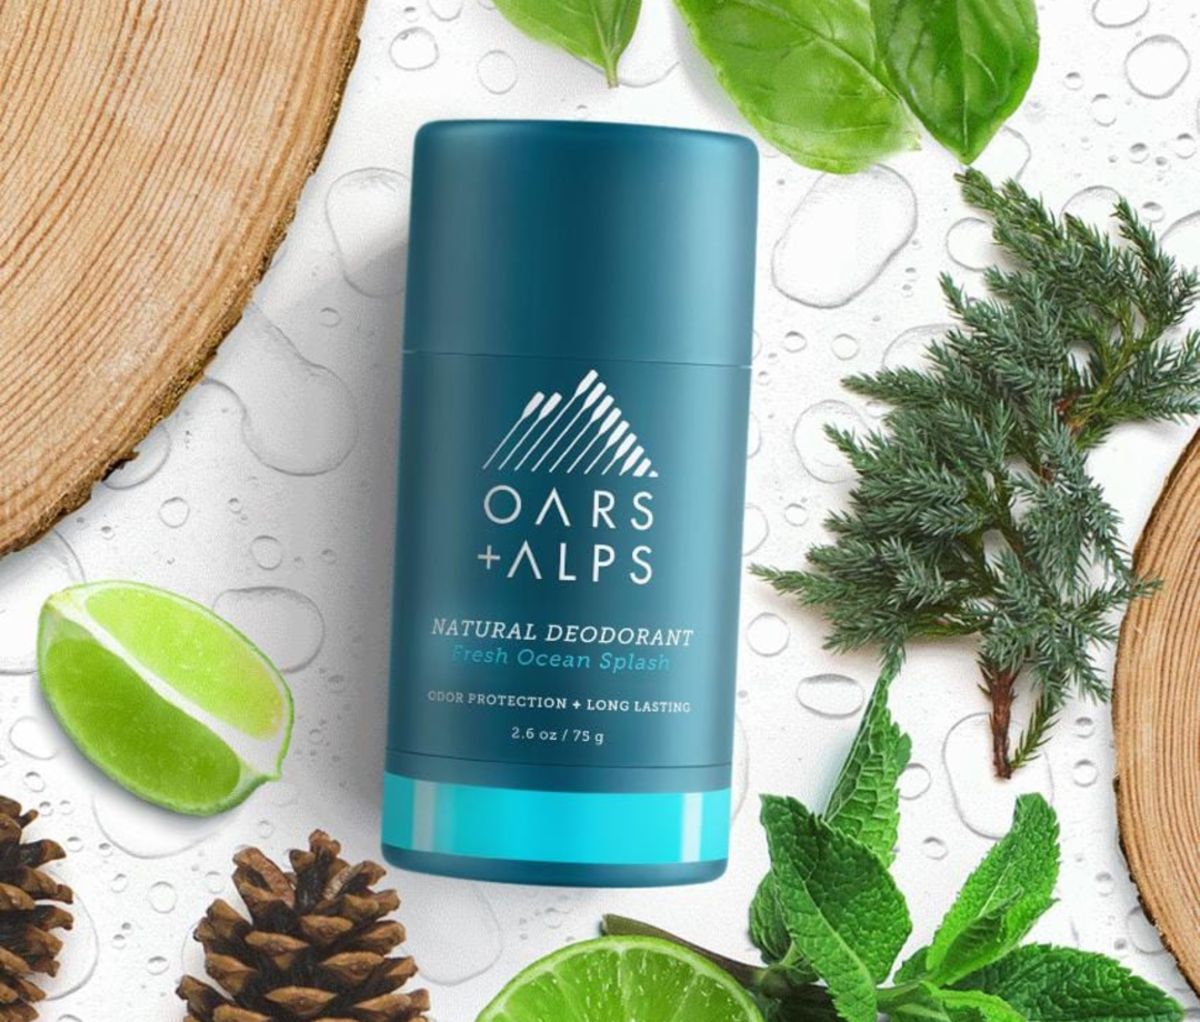 Oars + Alps Natural Deodorant